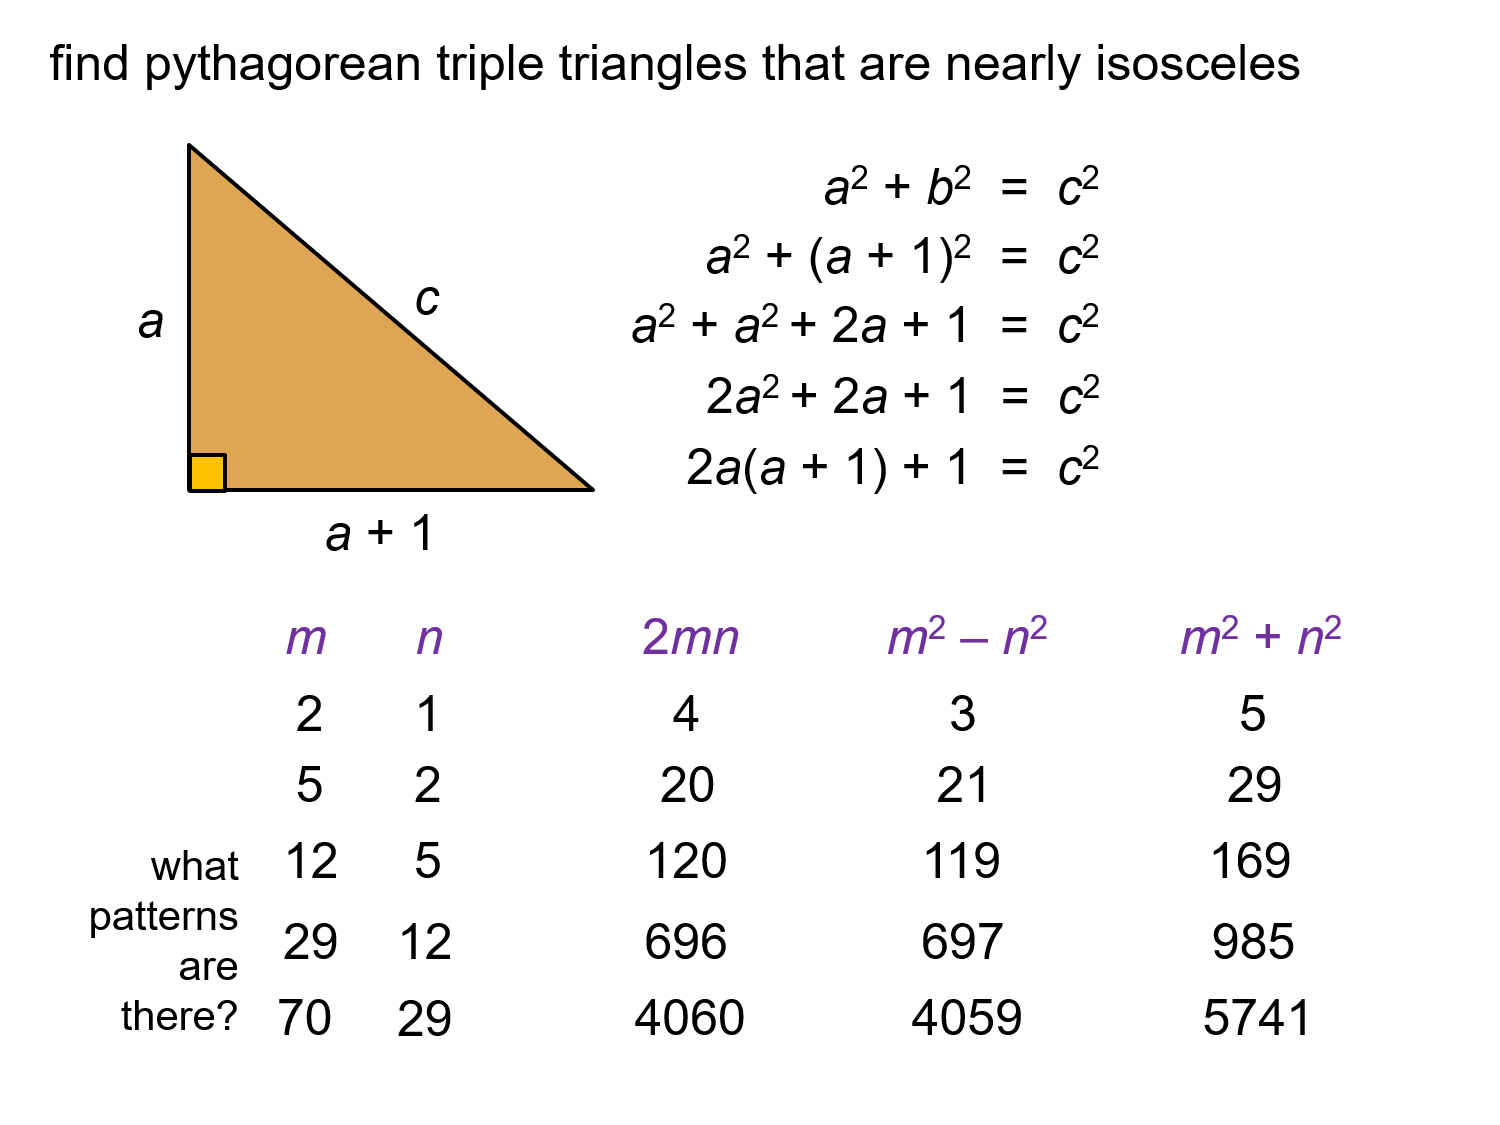 median-don-steward-mathematics-teaching-pythagorean-triples